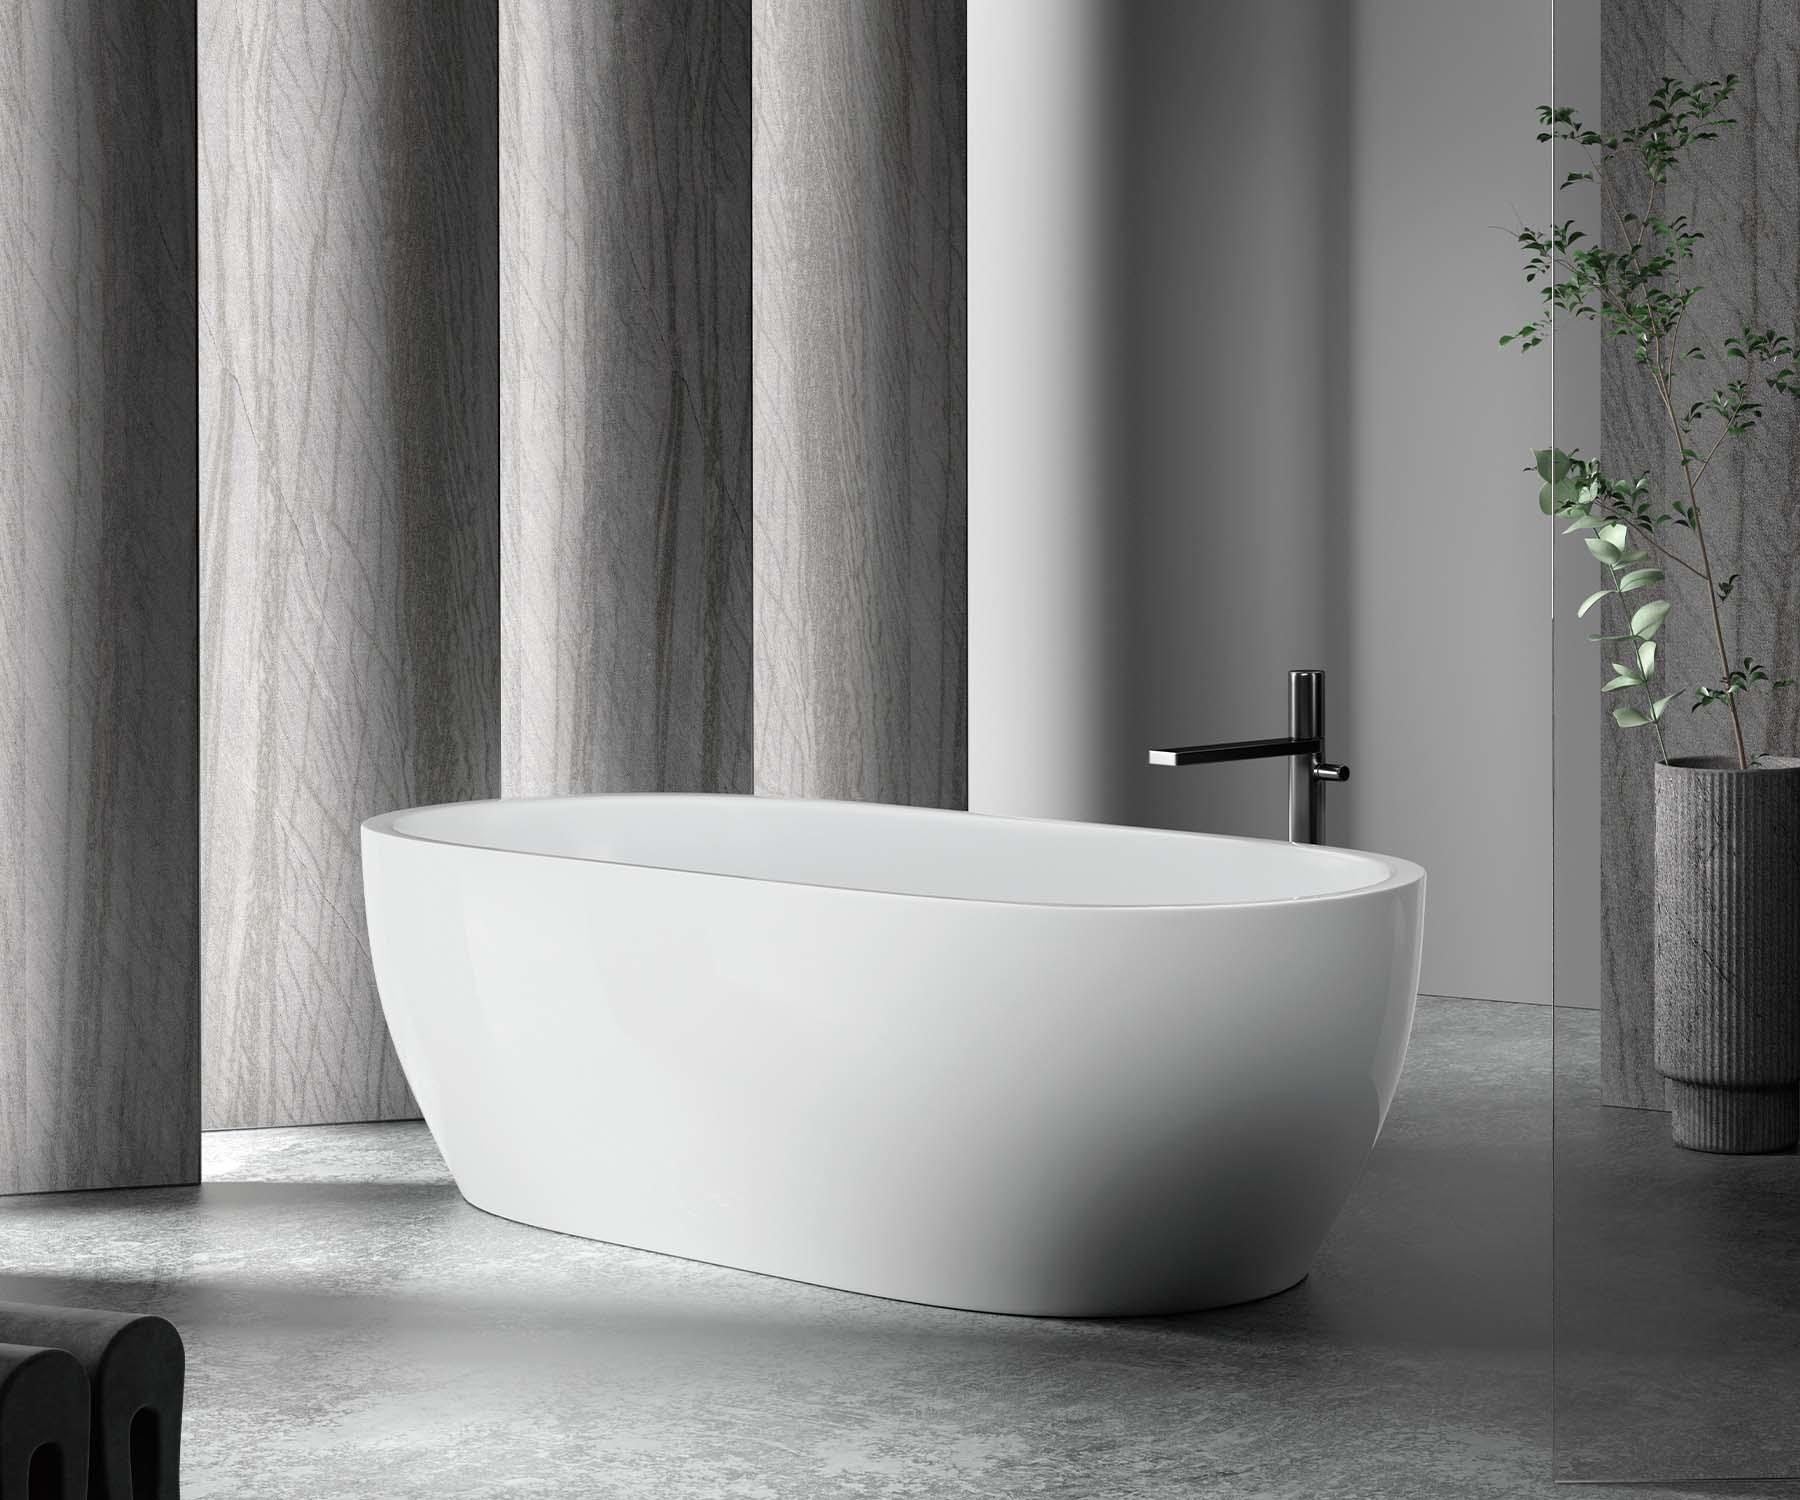 316 Fashion diamond cutting design freestanding integrated bathtub